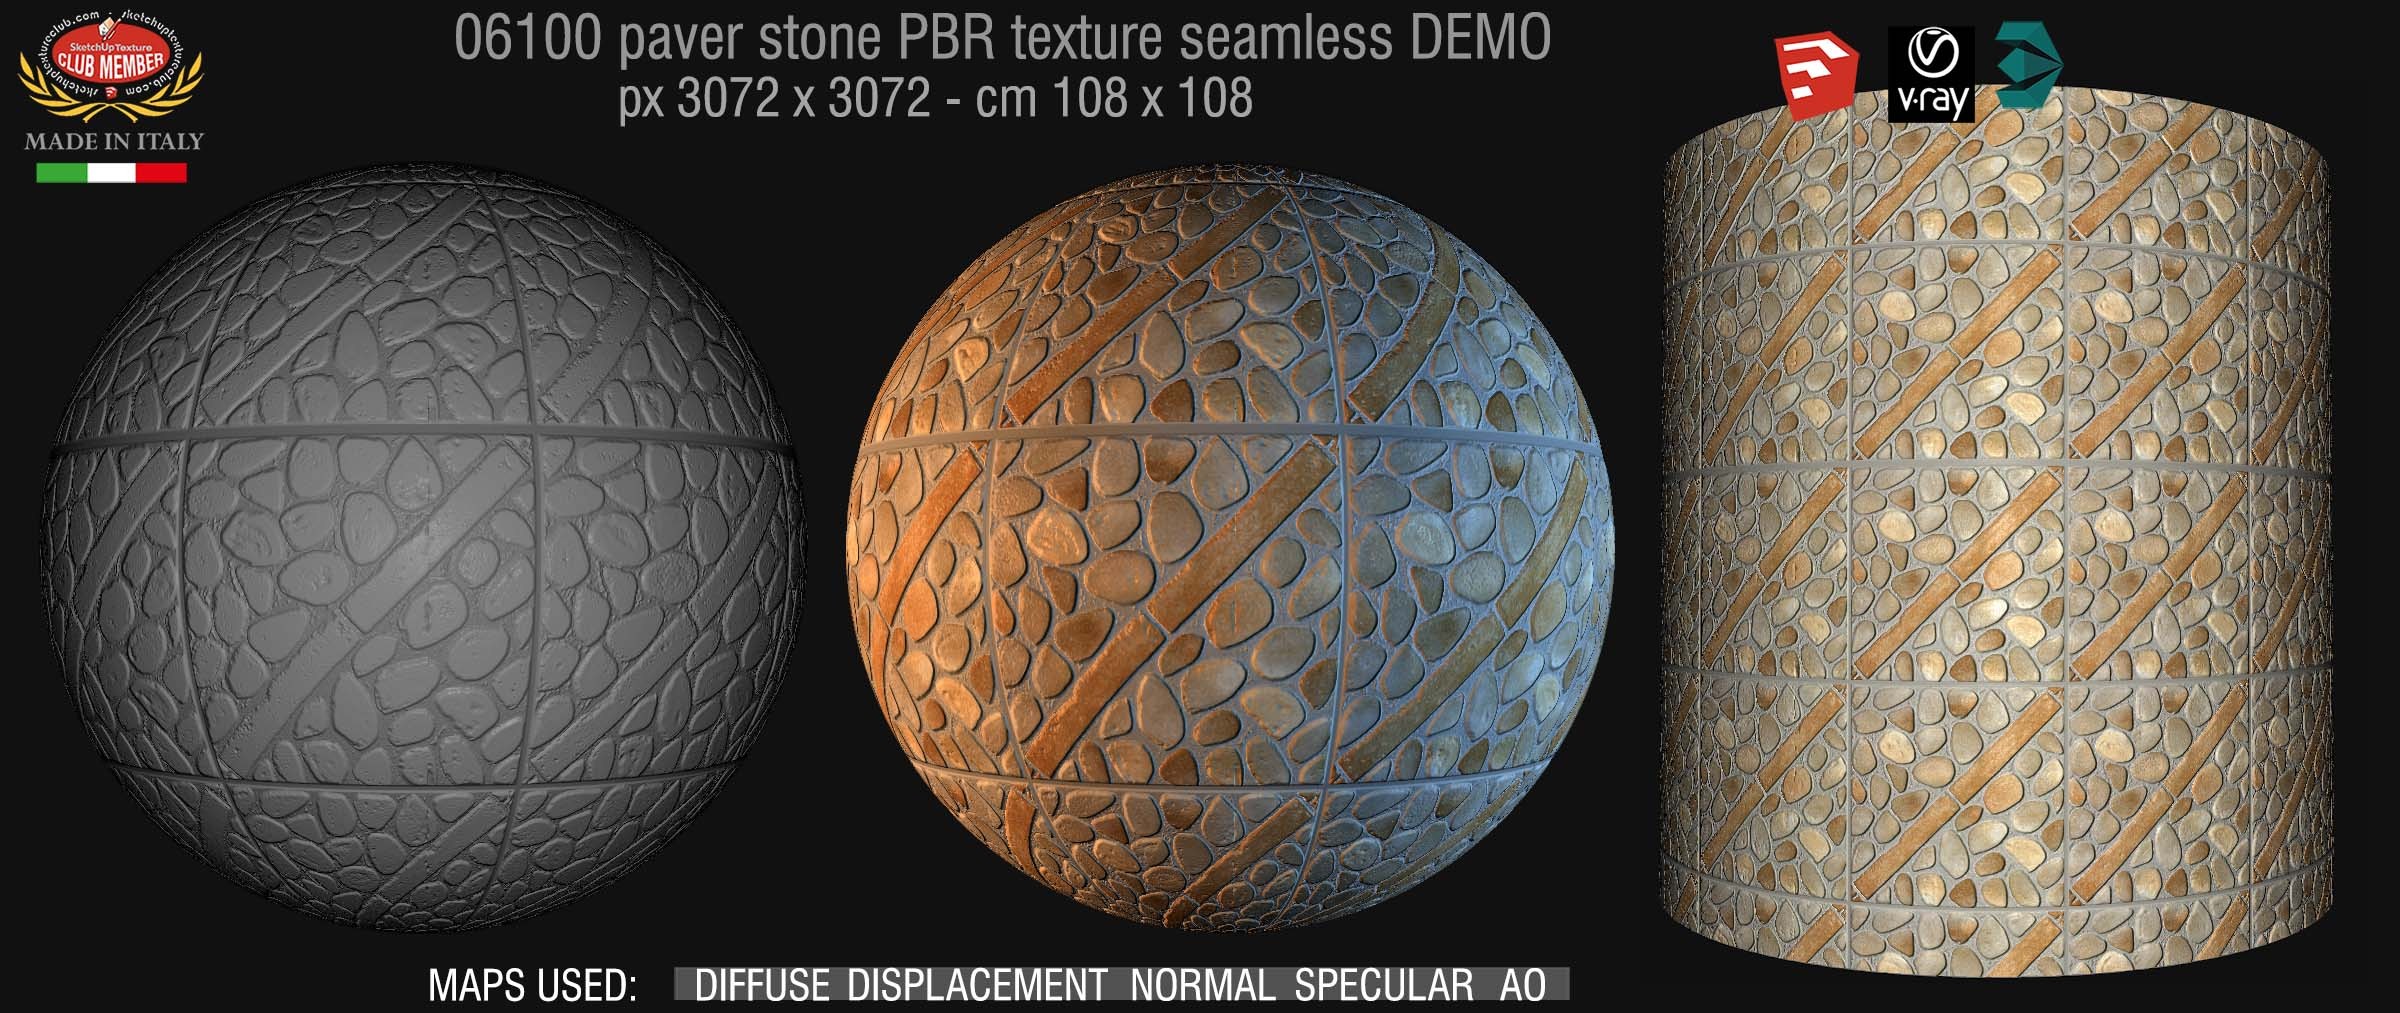 06100 paver stone PBR texture seamless DEMO